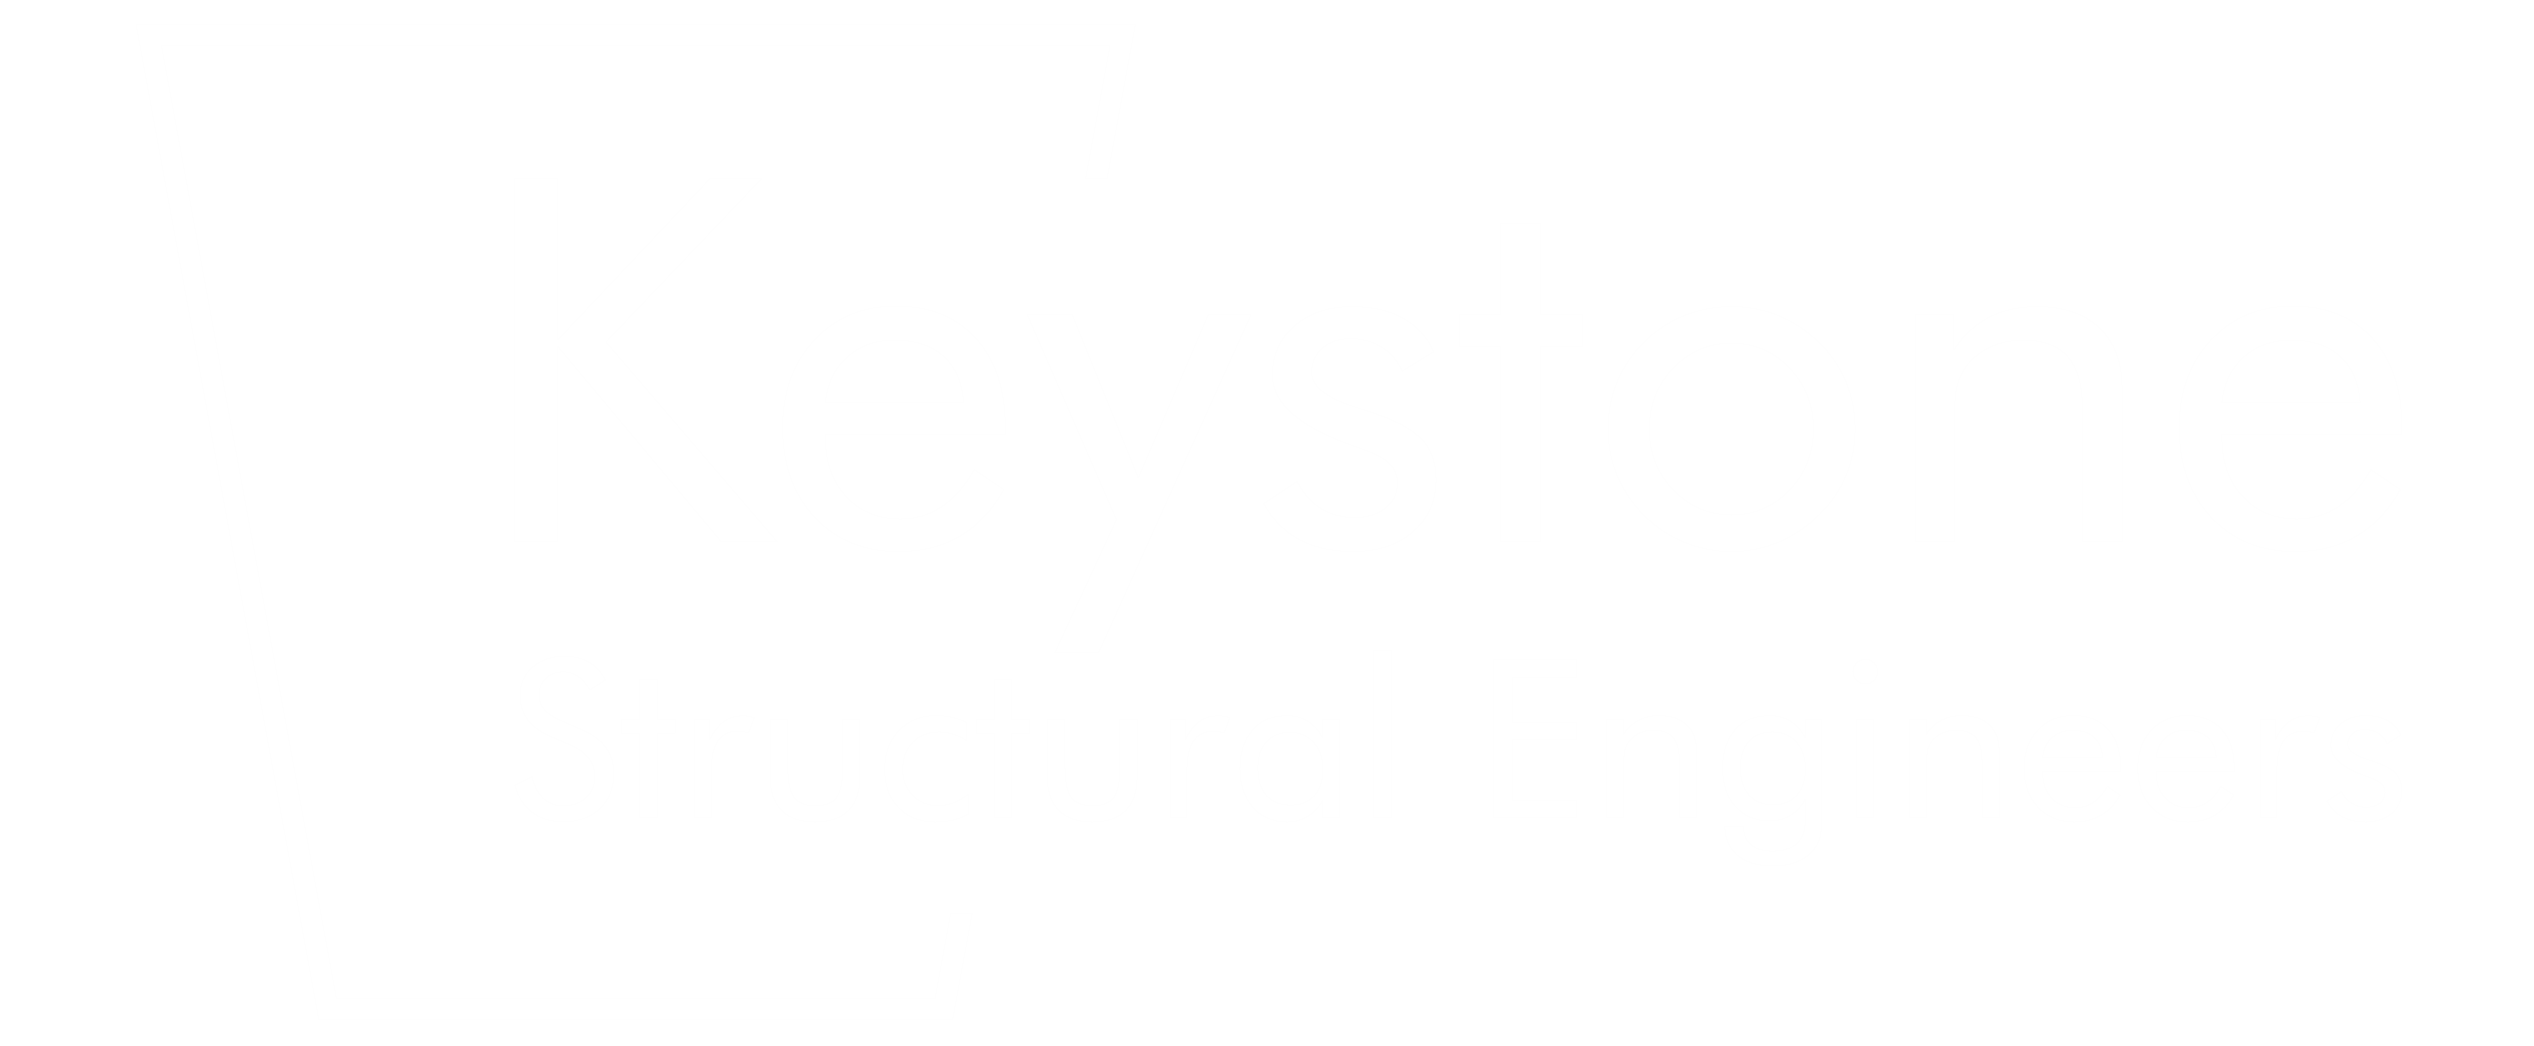 Keystone Structural Engineers